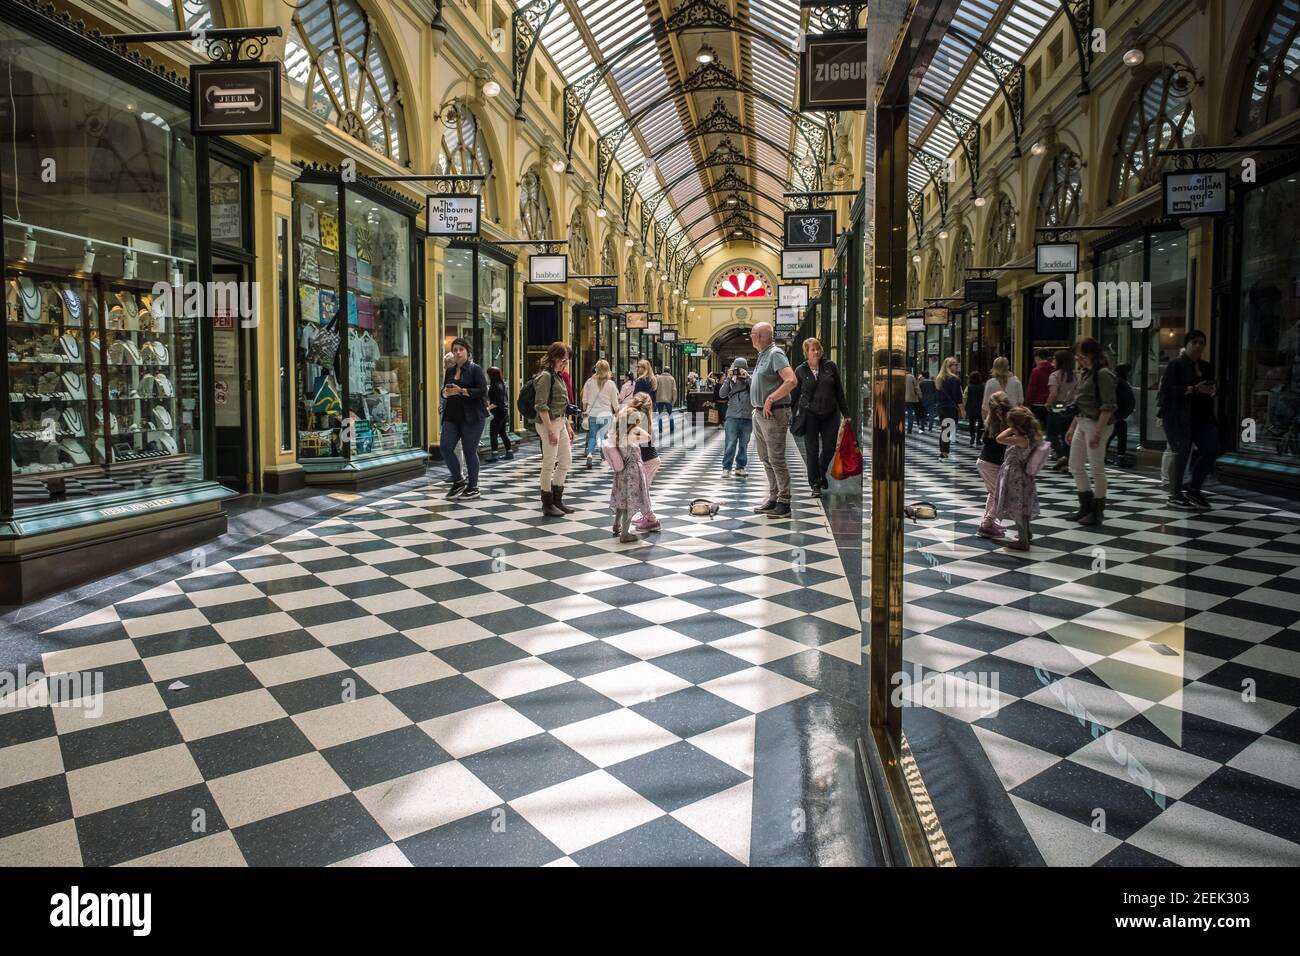 People walk through The Block Arcade in Melbourne, Australia Stock Photo